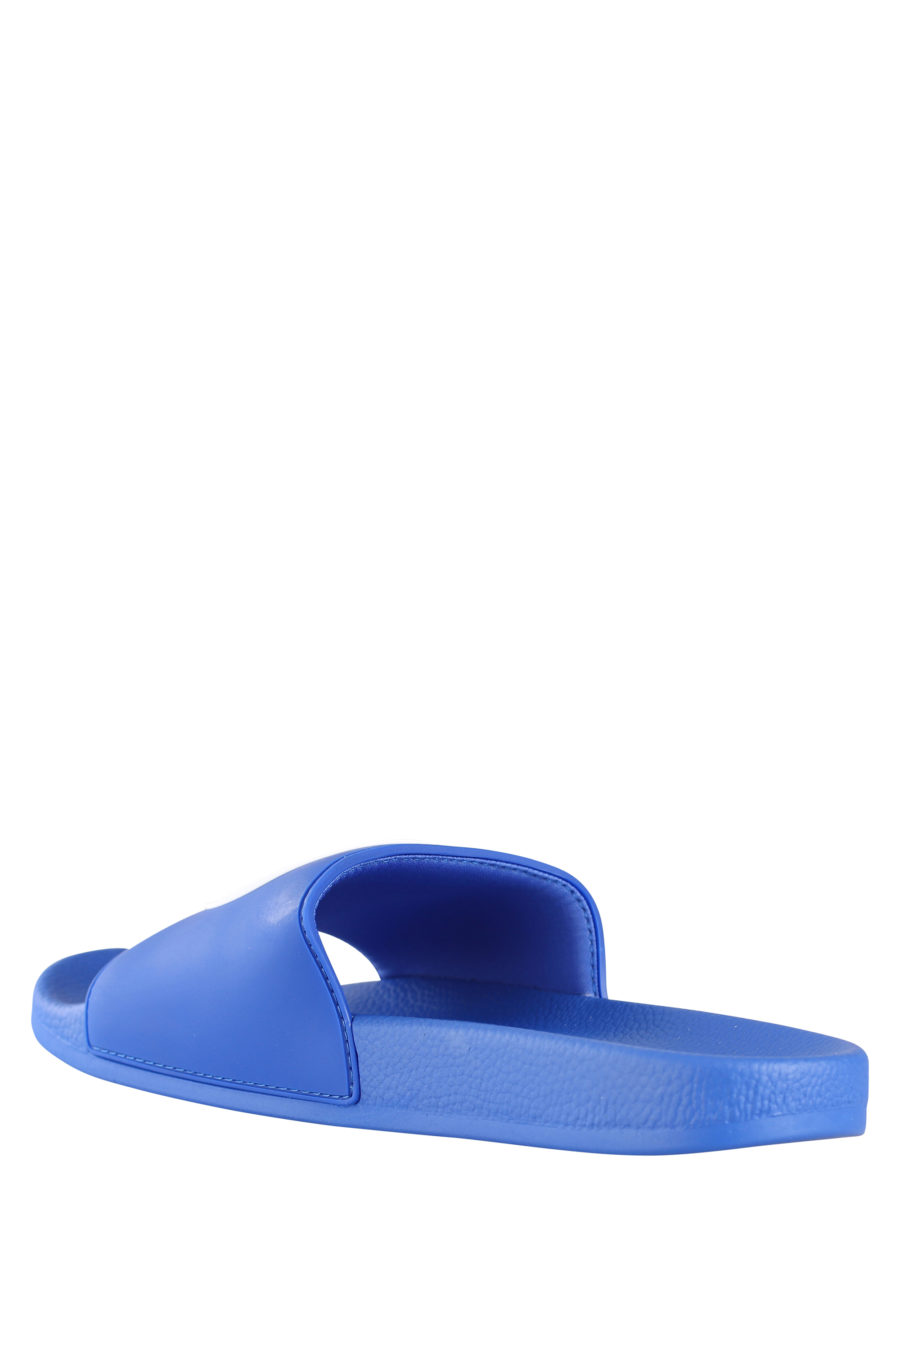 Blaue Flip Flops mit Kreislogo - IMG 9667